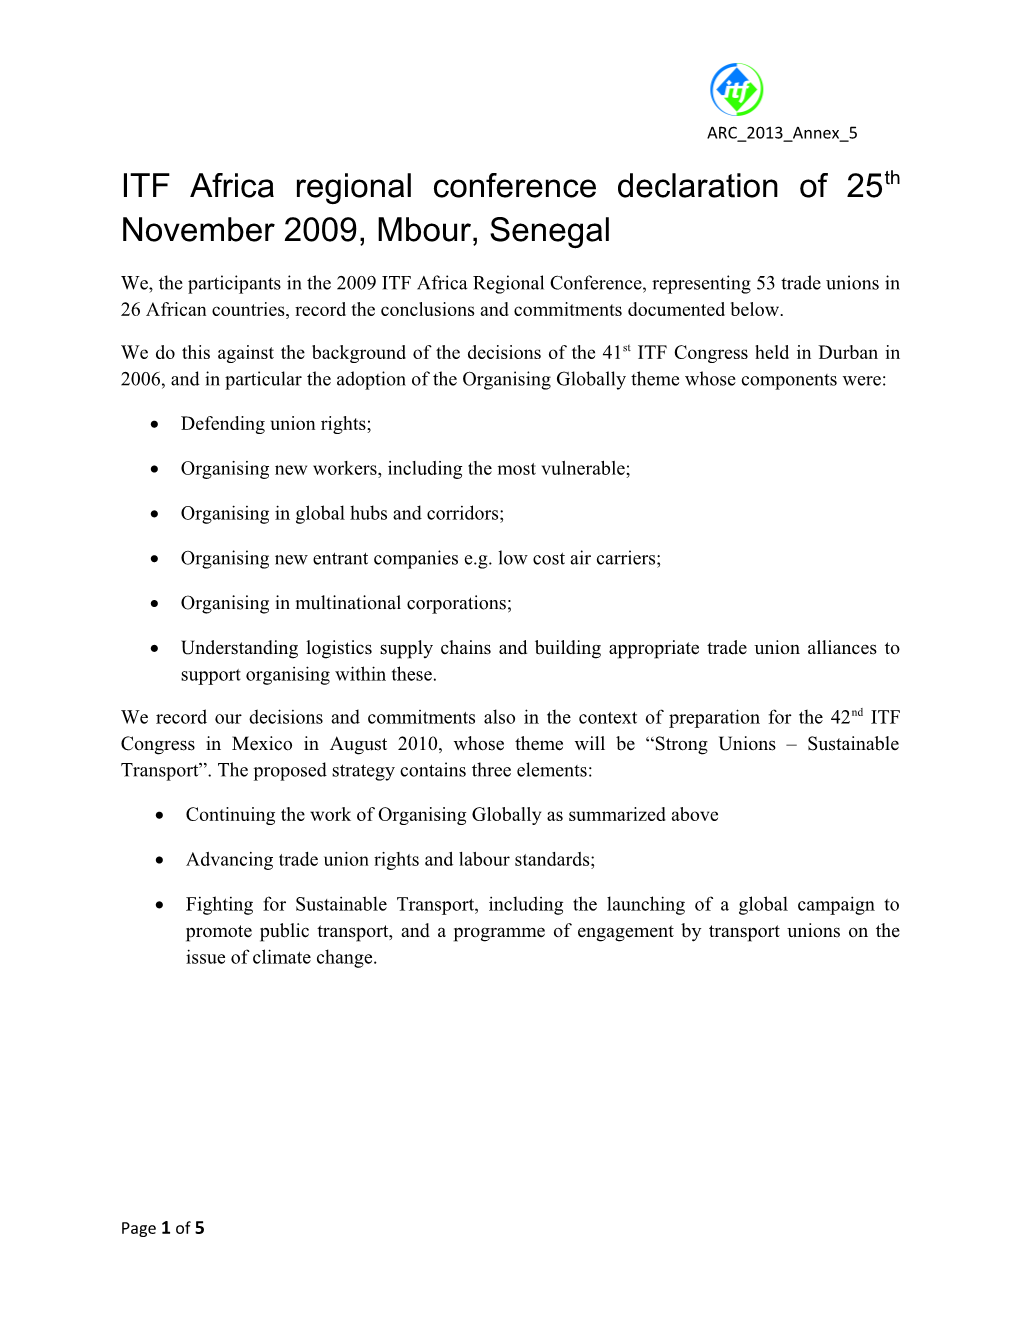 ITF Africa Regional Conferencedeclaration of 25Th November 2009, Mbour, Senegal